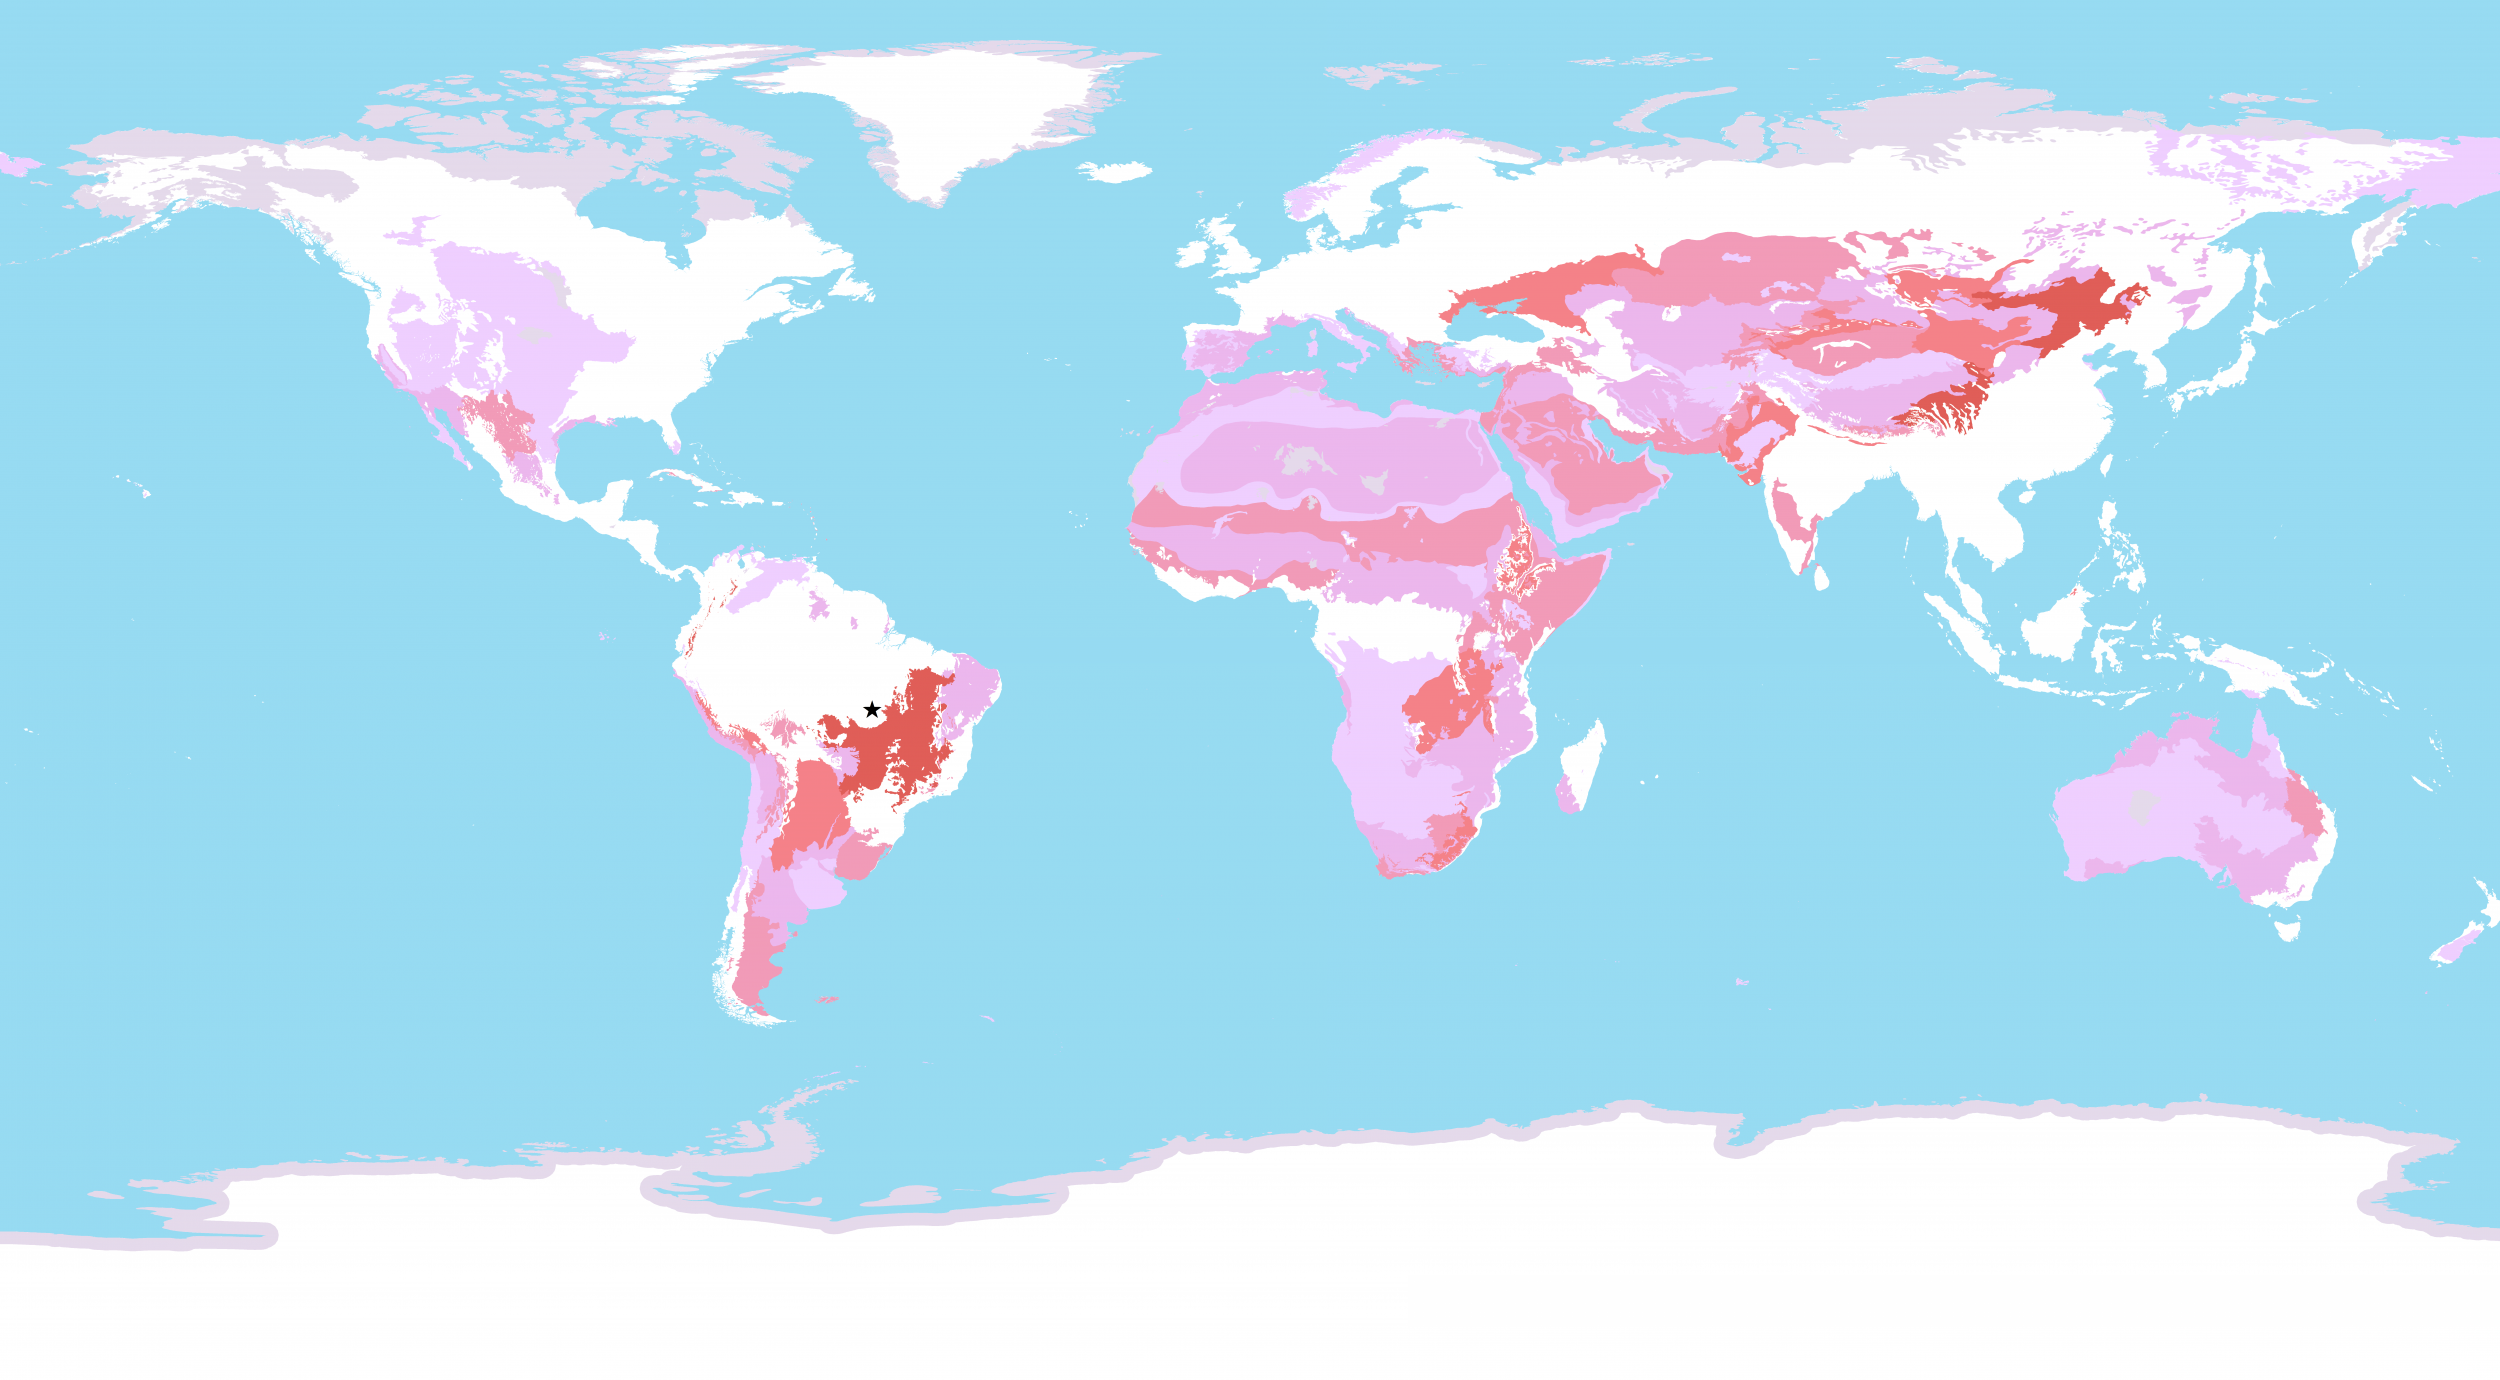 Numbers of threatened vertebrates in rangelands globally